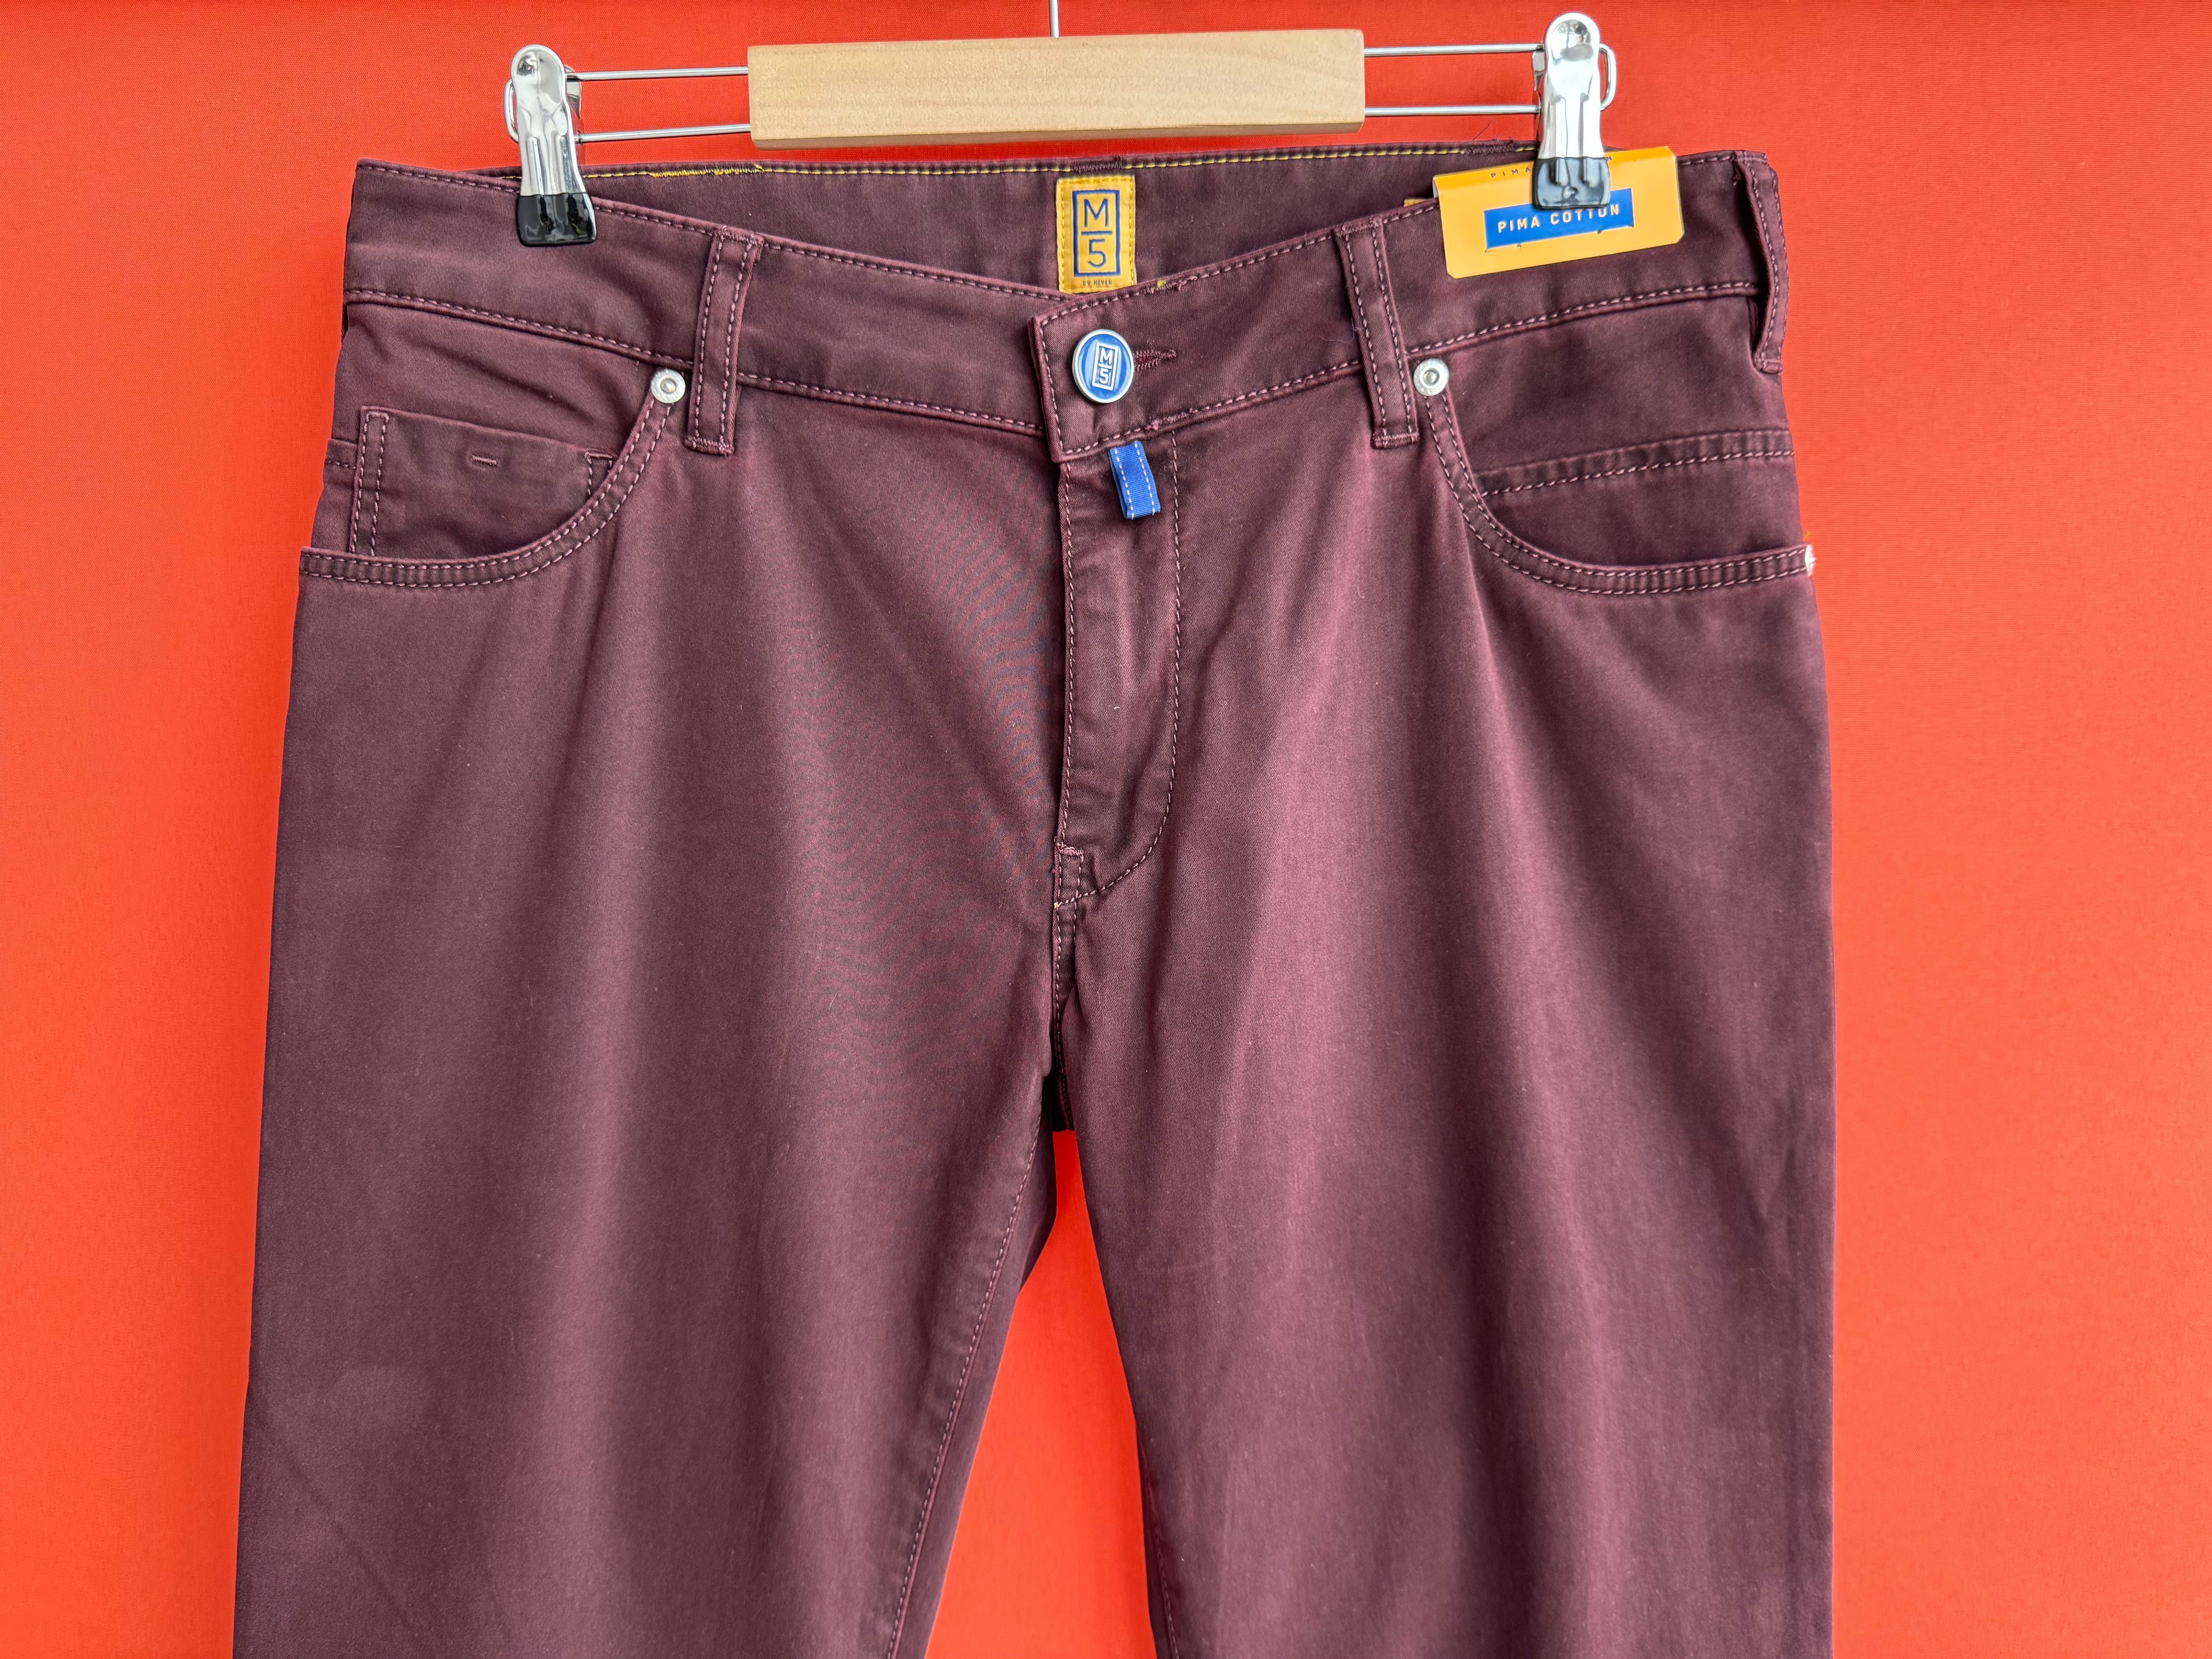 M5 by Meyer оригинал мужские джинсы штаны чиносы брюки размер 32 NEW